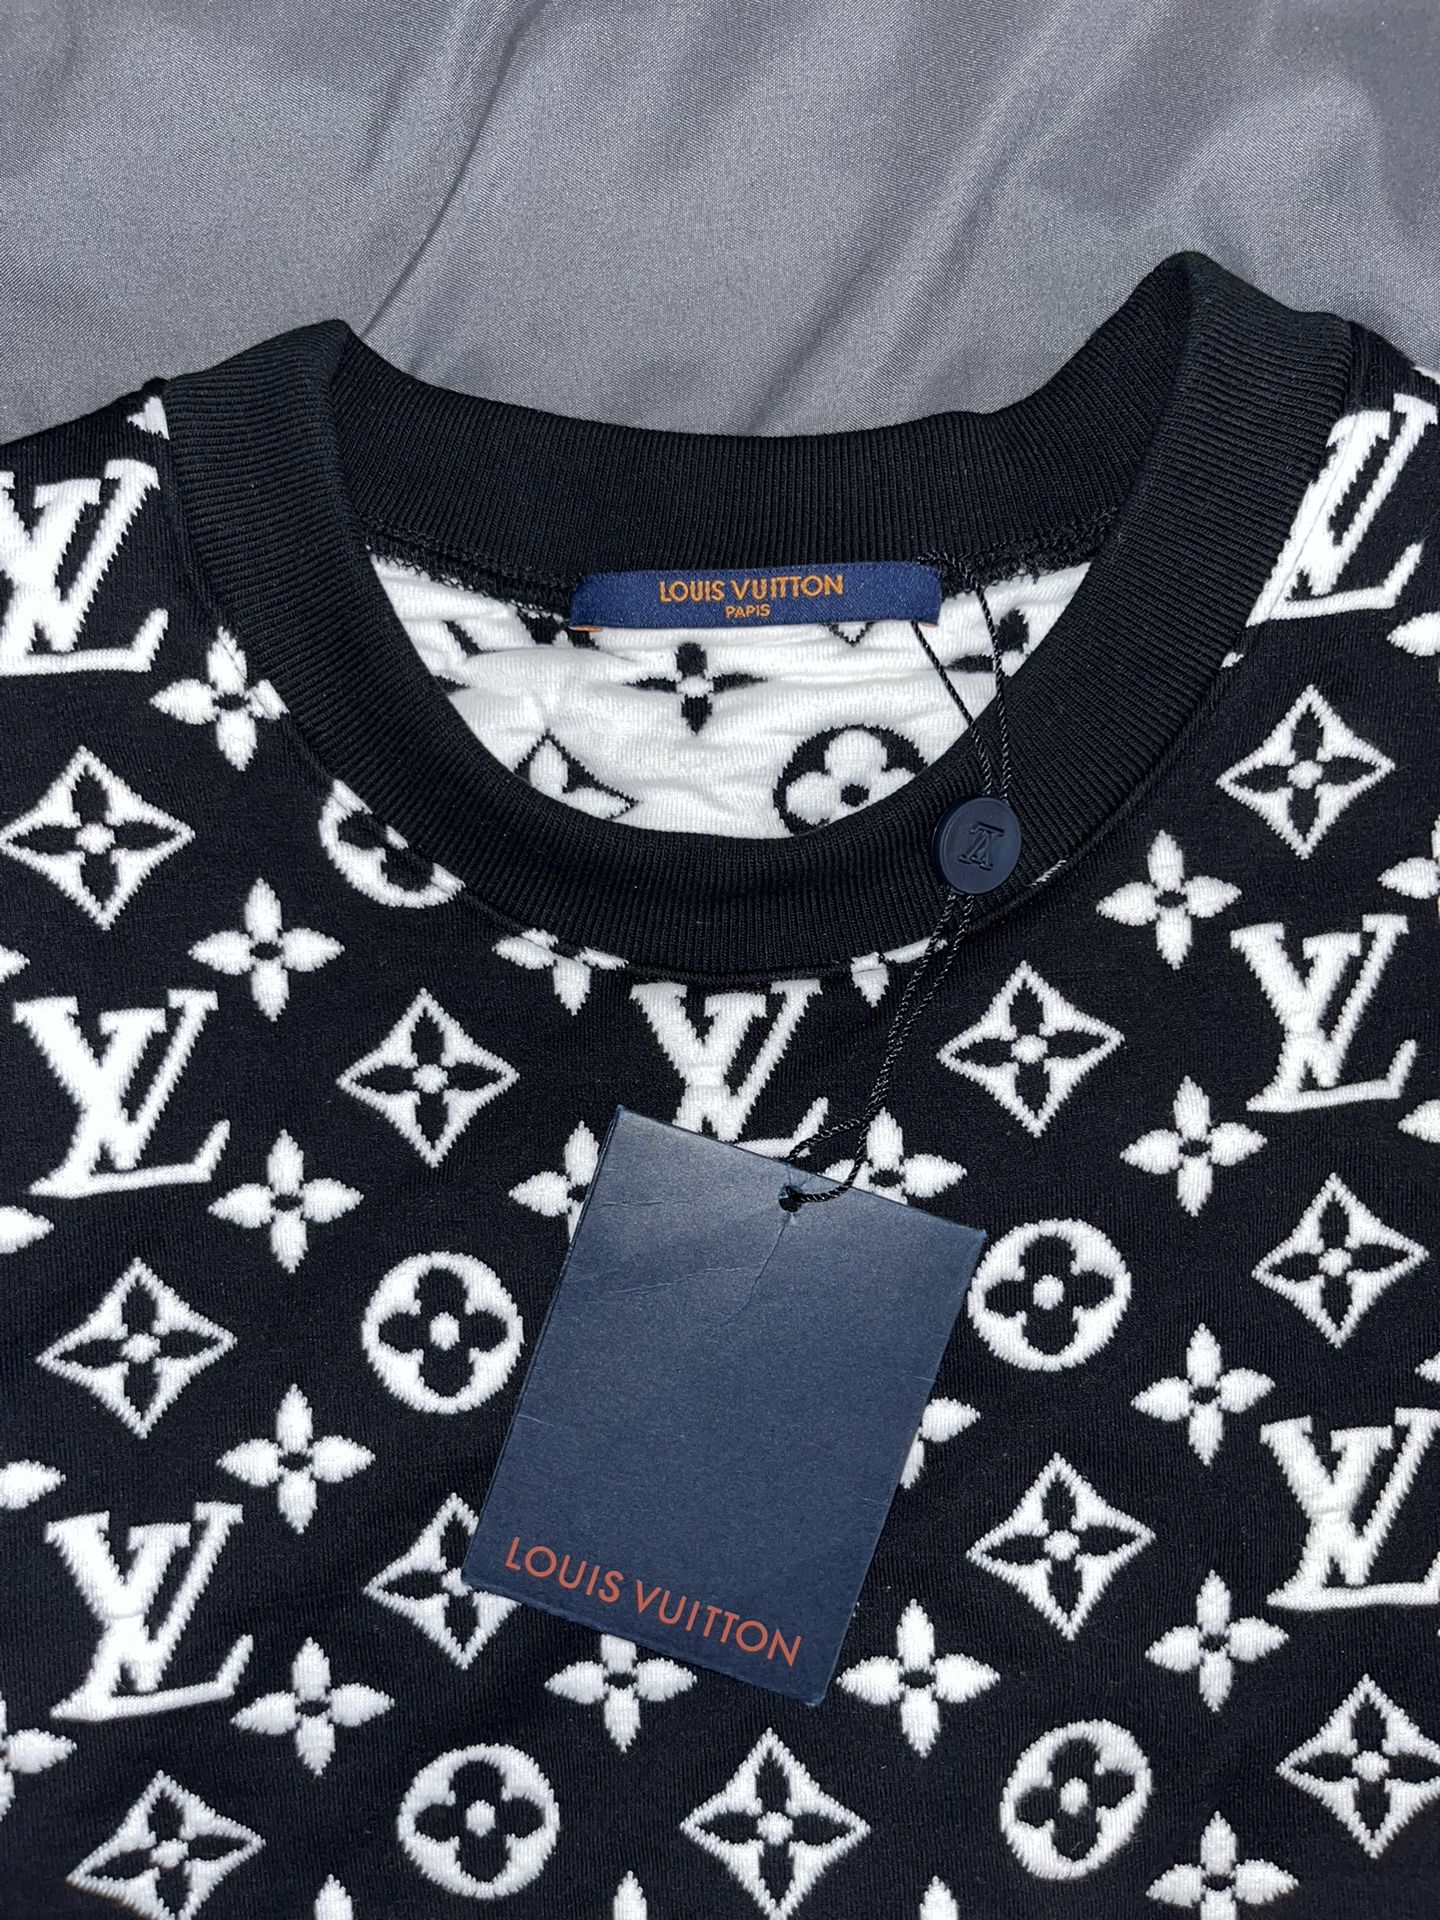 LV Gradient Monogram Fil Coup Sweatshirt for Sale in Alafaya, FL - OfferUp